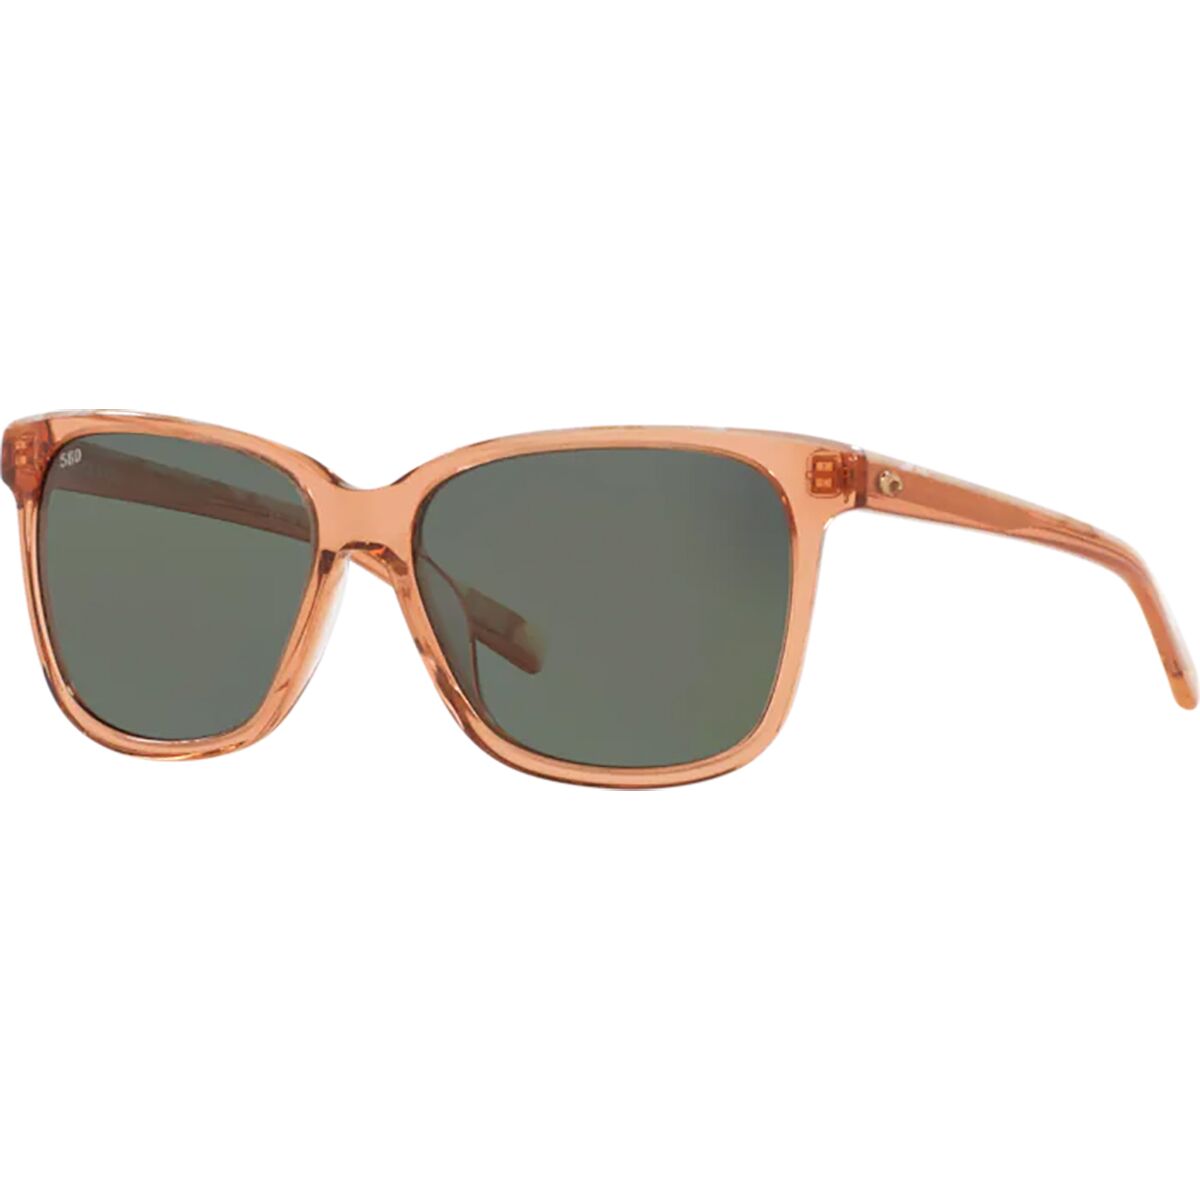 Costa May 580G Polarized Sunglasses - Women's